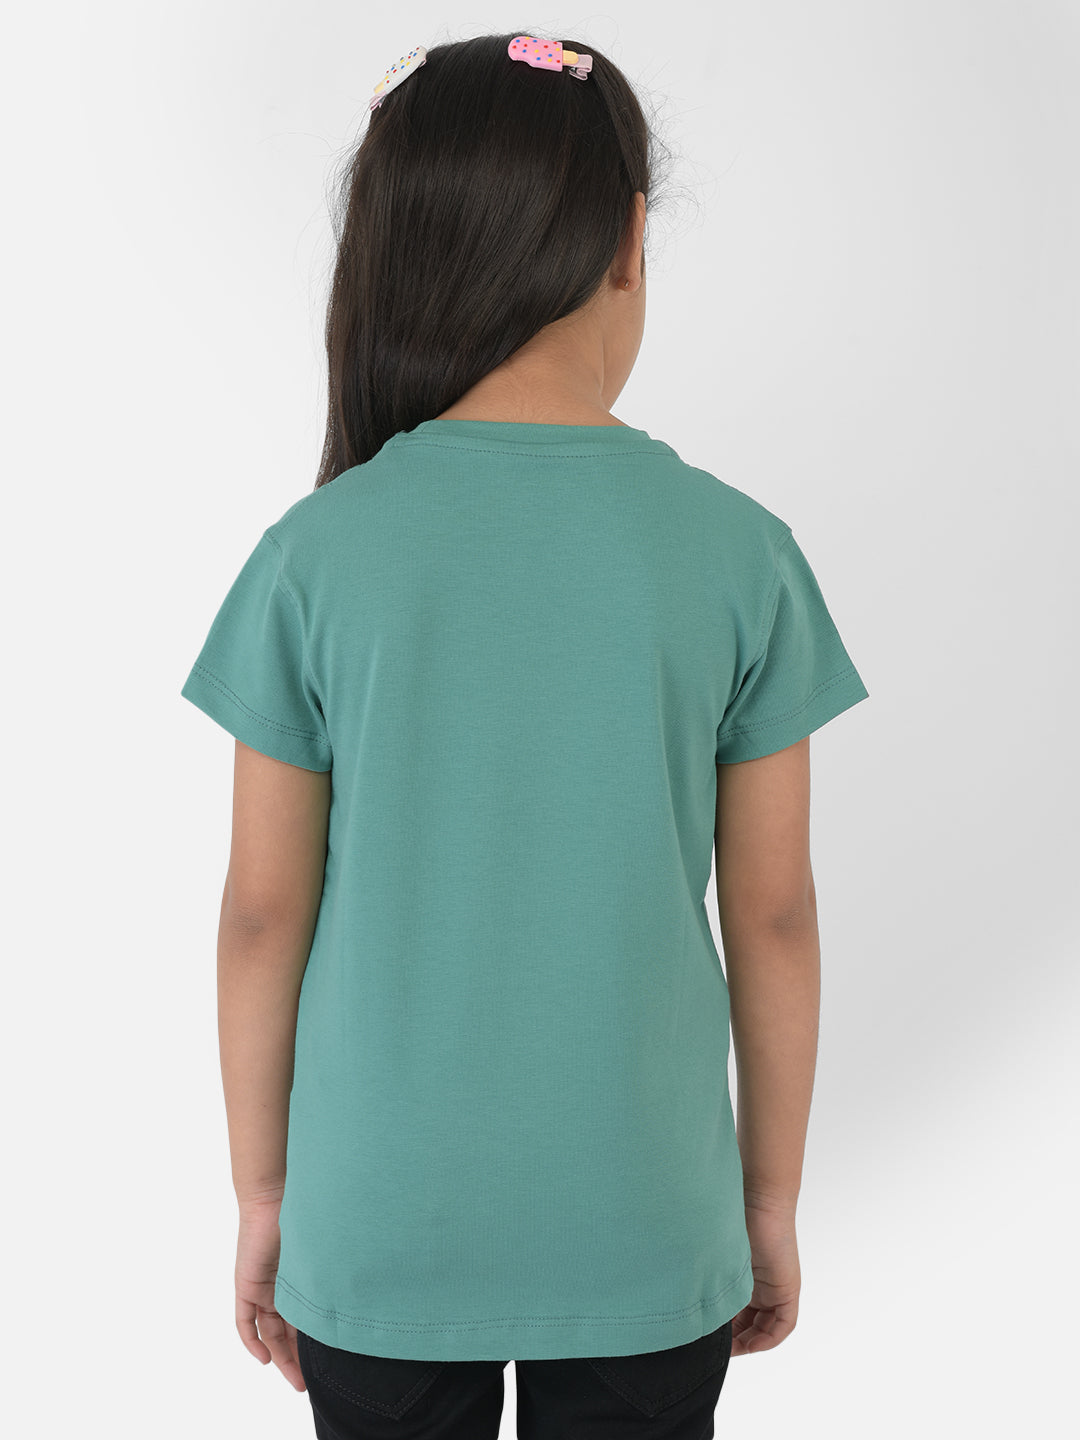 Green Round Neck T-Shirt - Girls T-Shirts